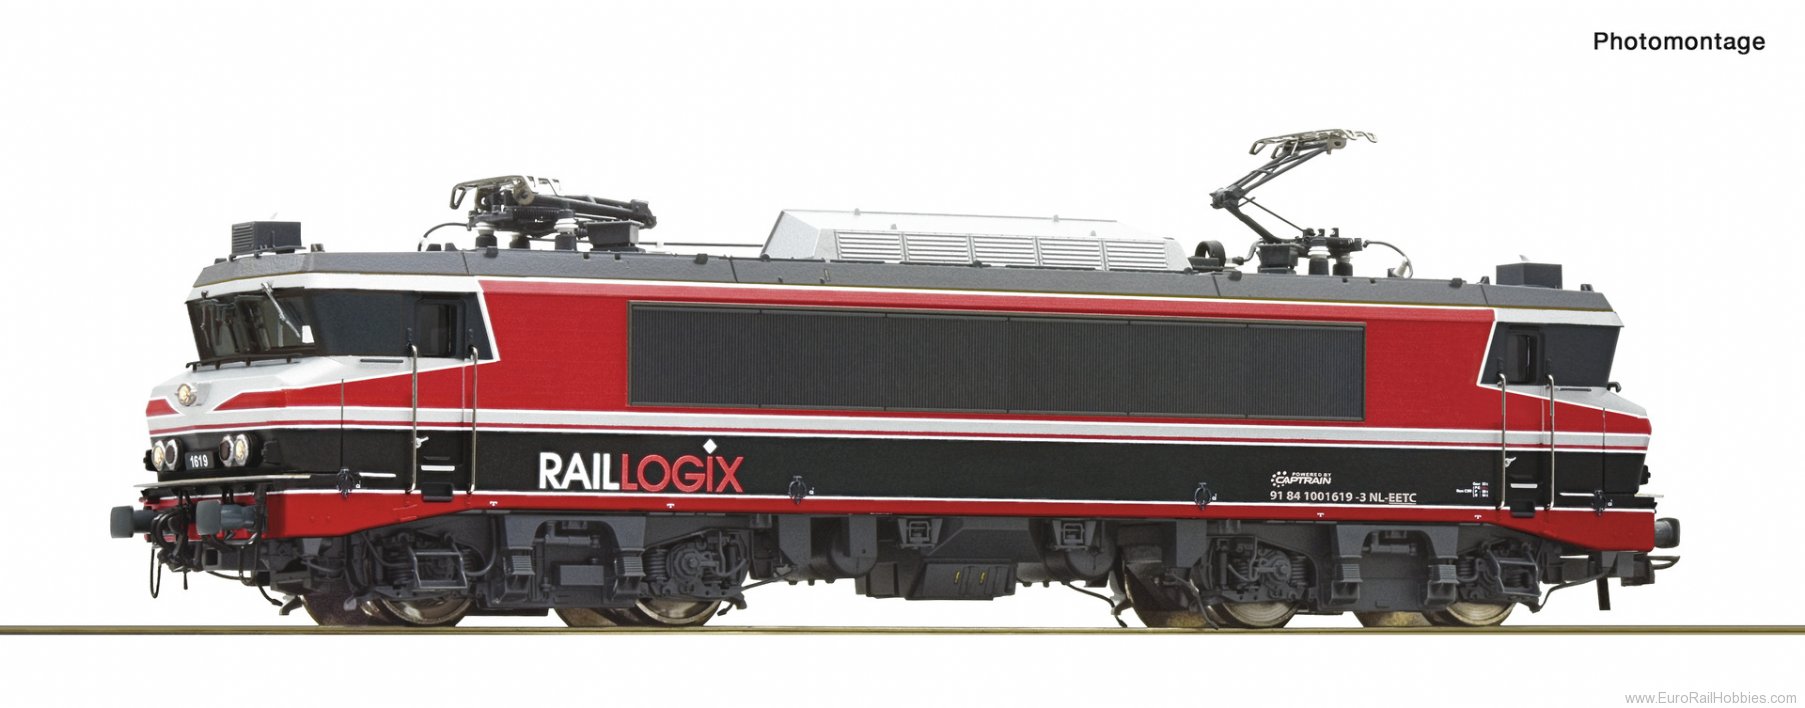 Roco 7520068 Electric locomotive 1619, Raillogix (Marklin 